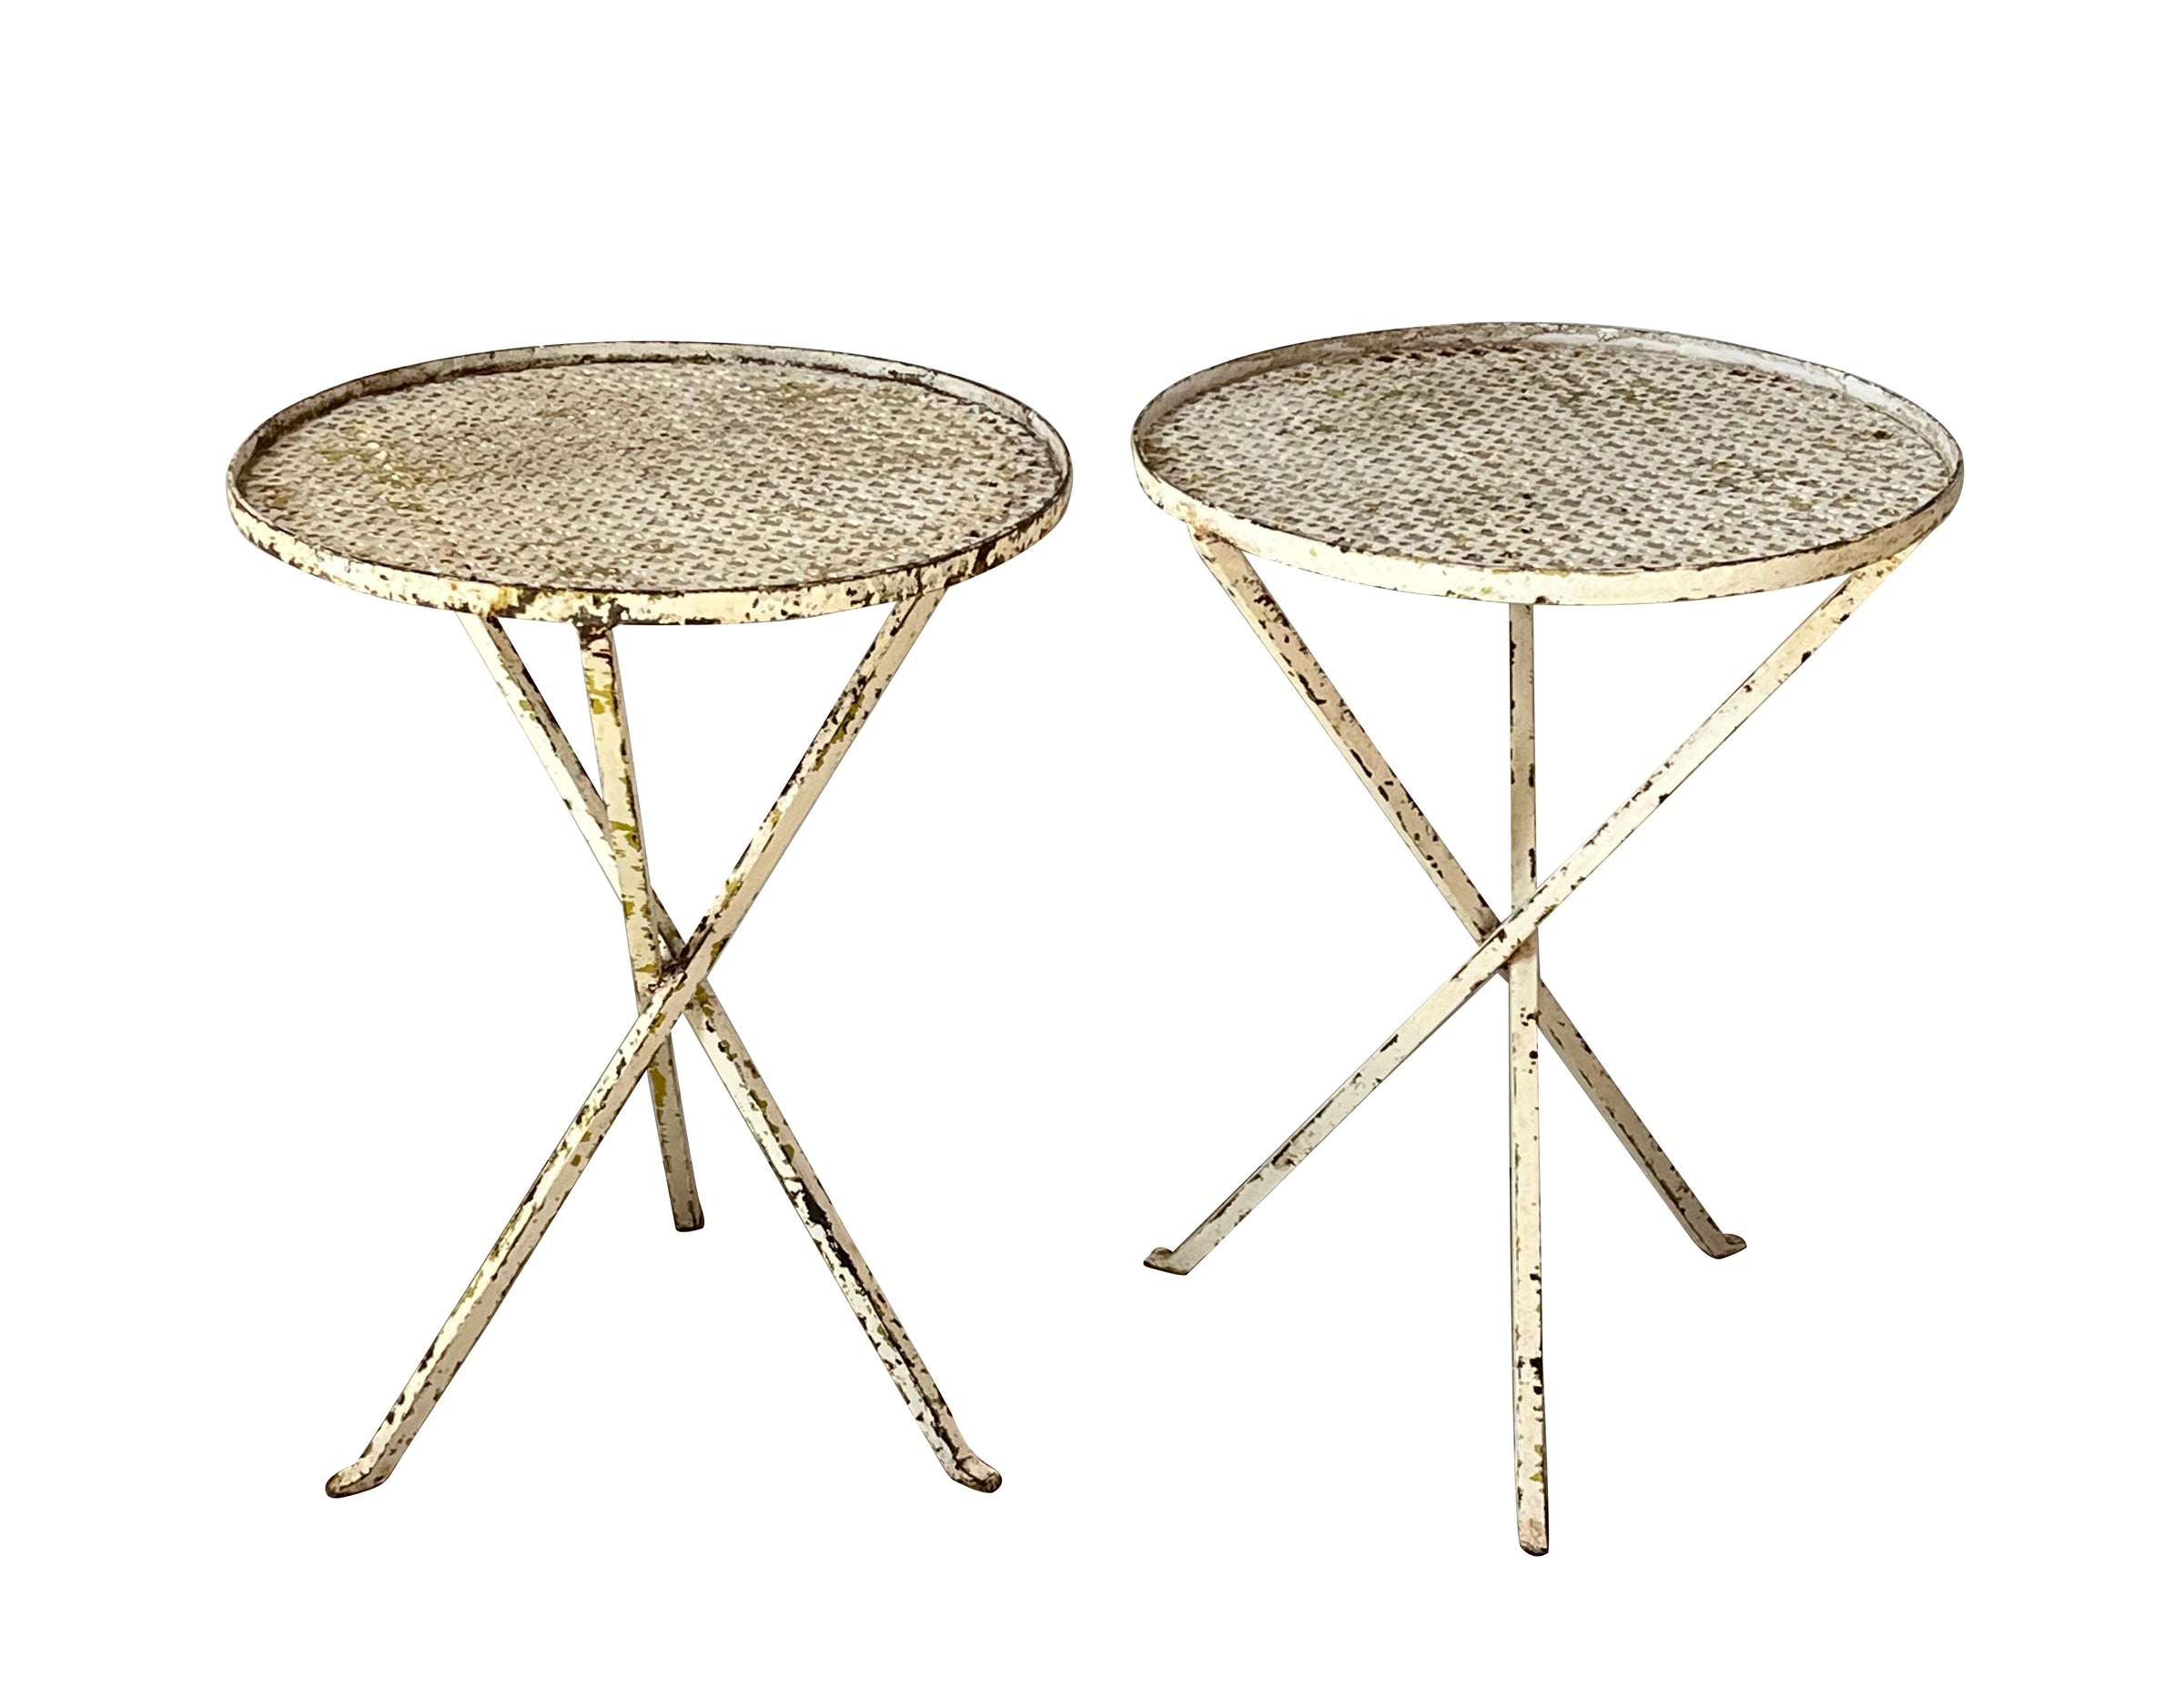 Pair of round martini tables by Mathieu Matégot